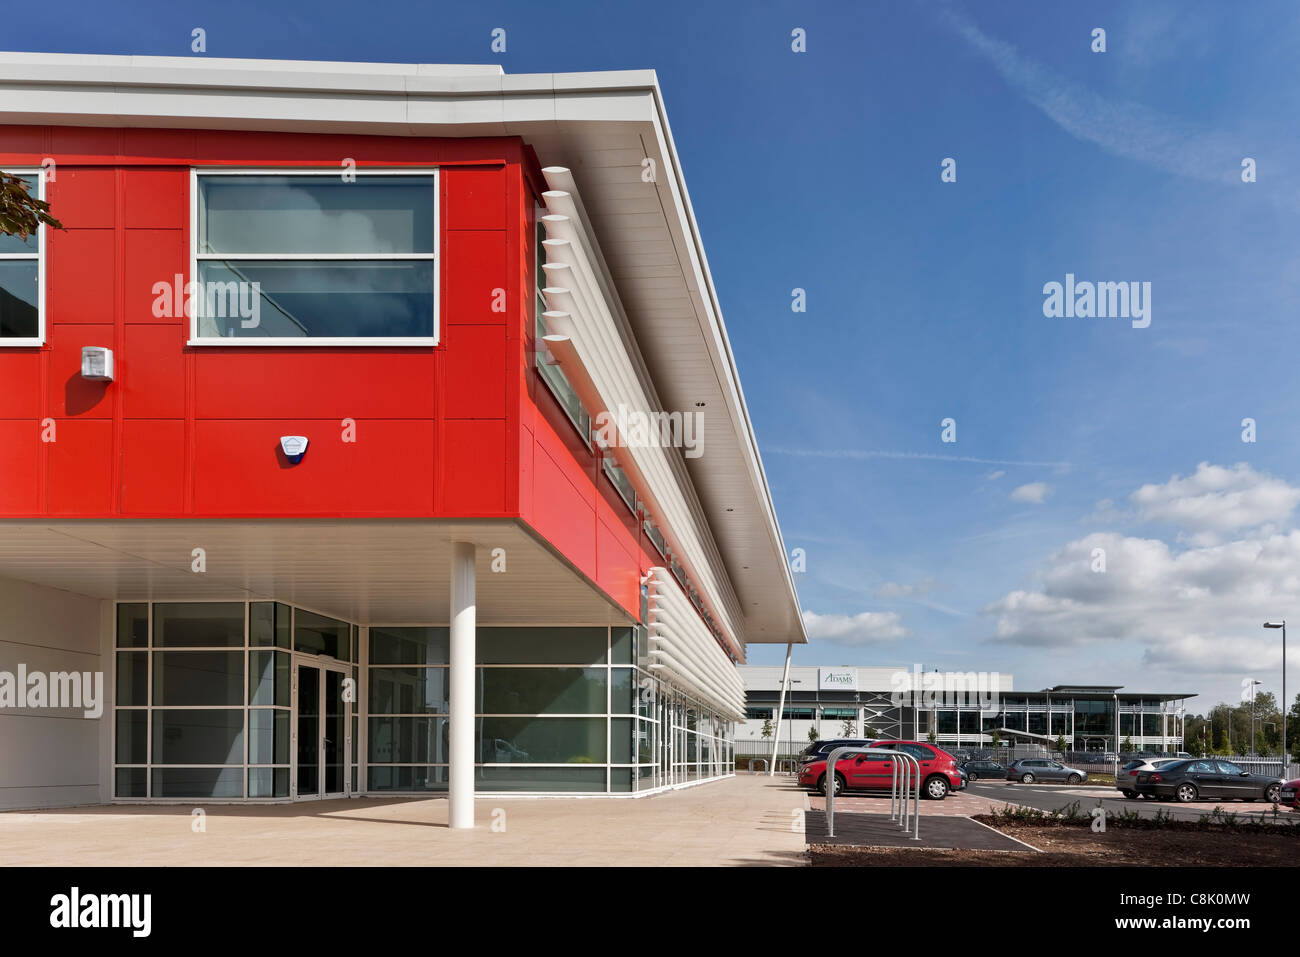 Adams Foods Fabrik und Büros in Leek, Staffordshire. Stockfoto